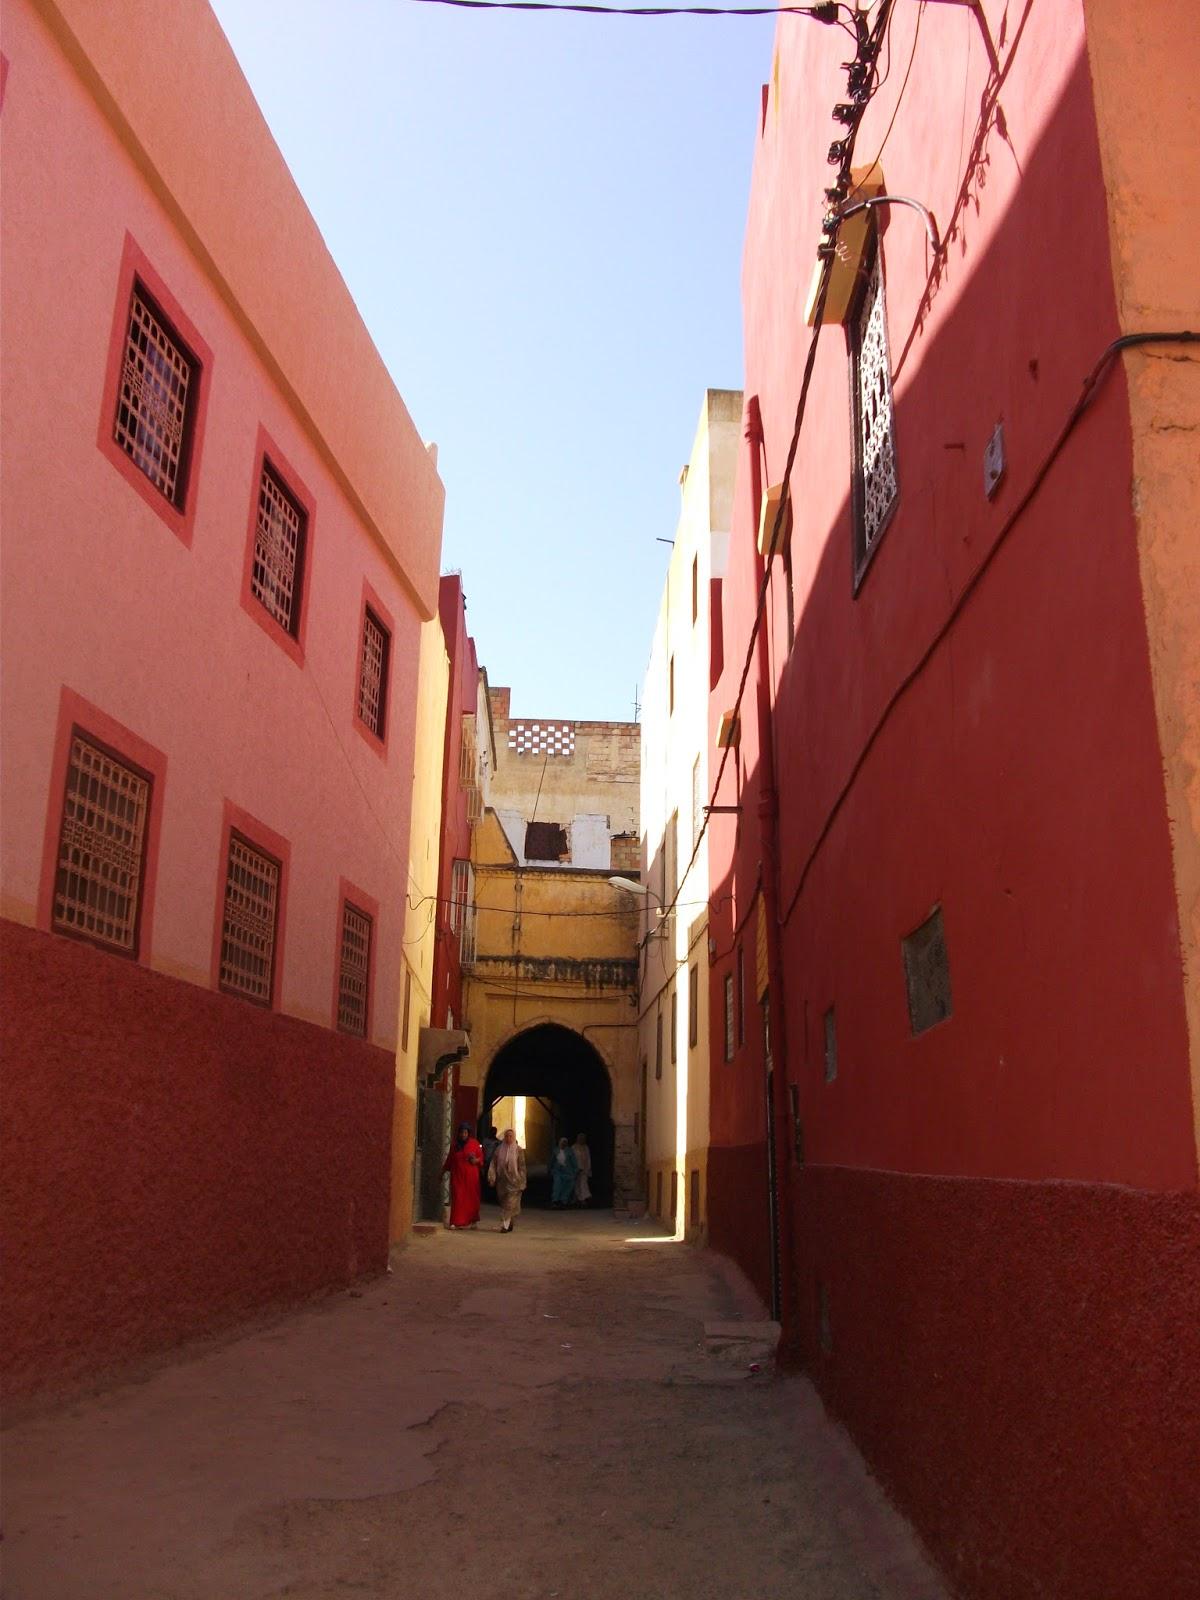 Morocco part 3